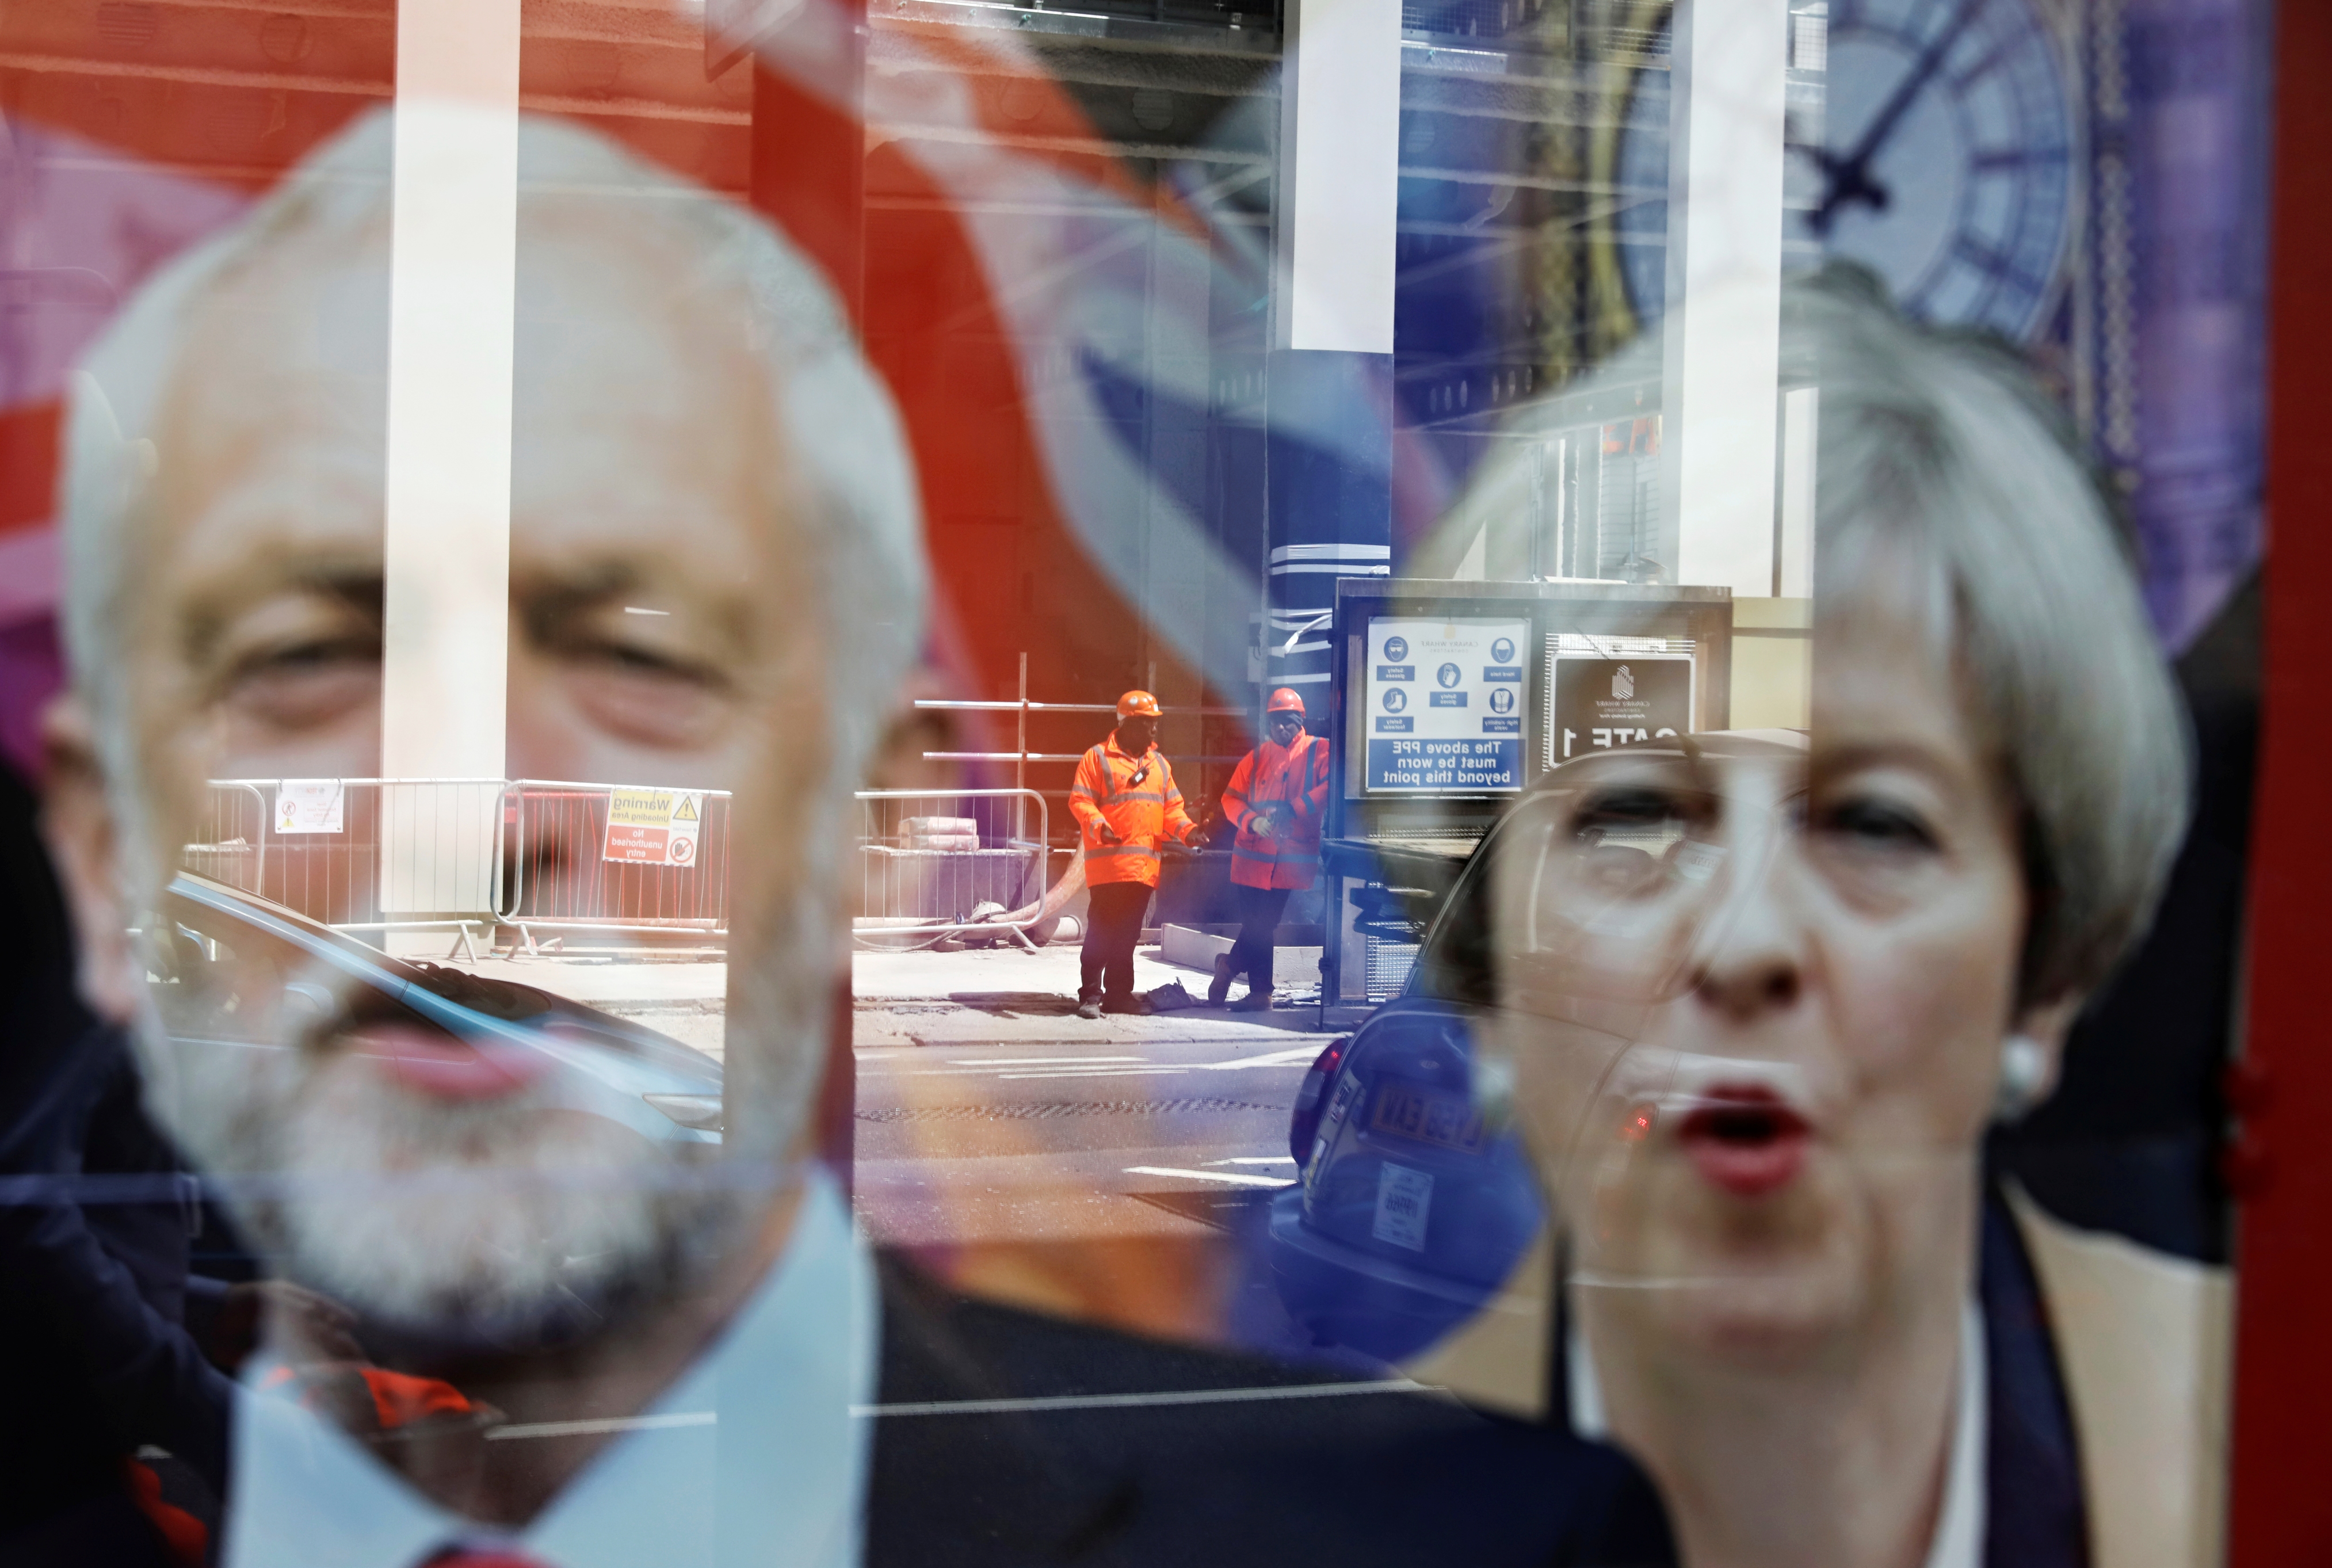 Labour-leider Jeremy Corbyn en de Britse premier Theresa May